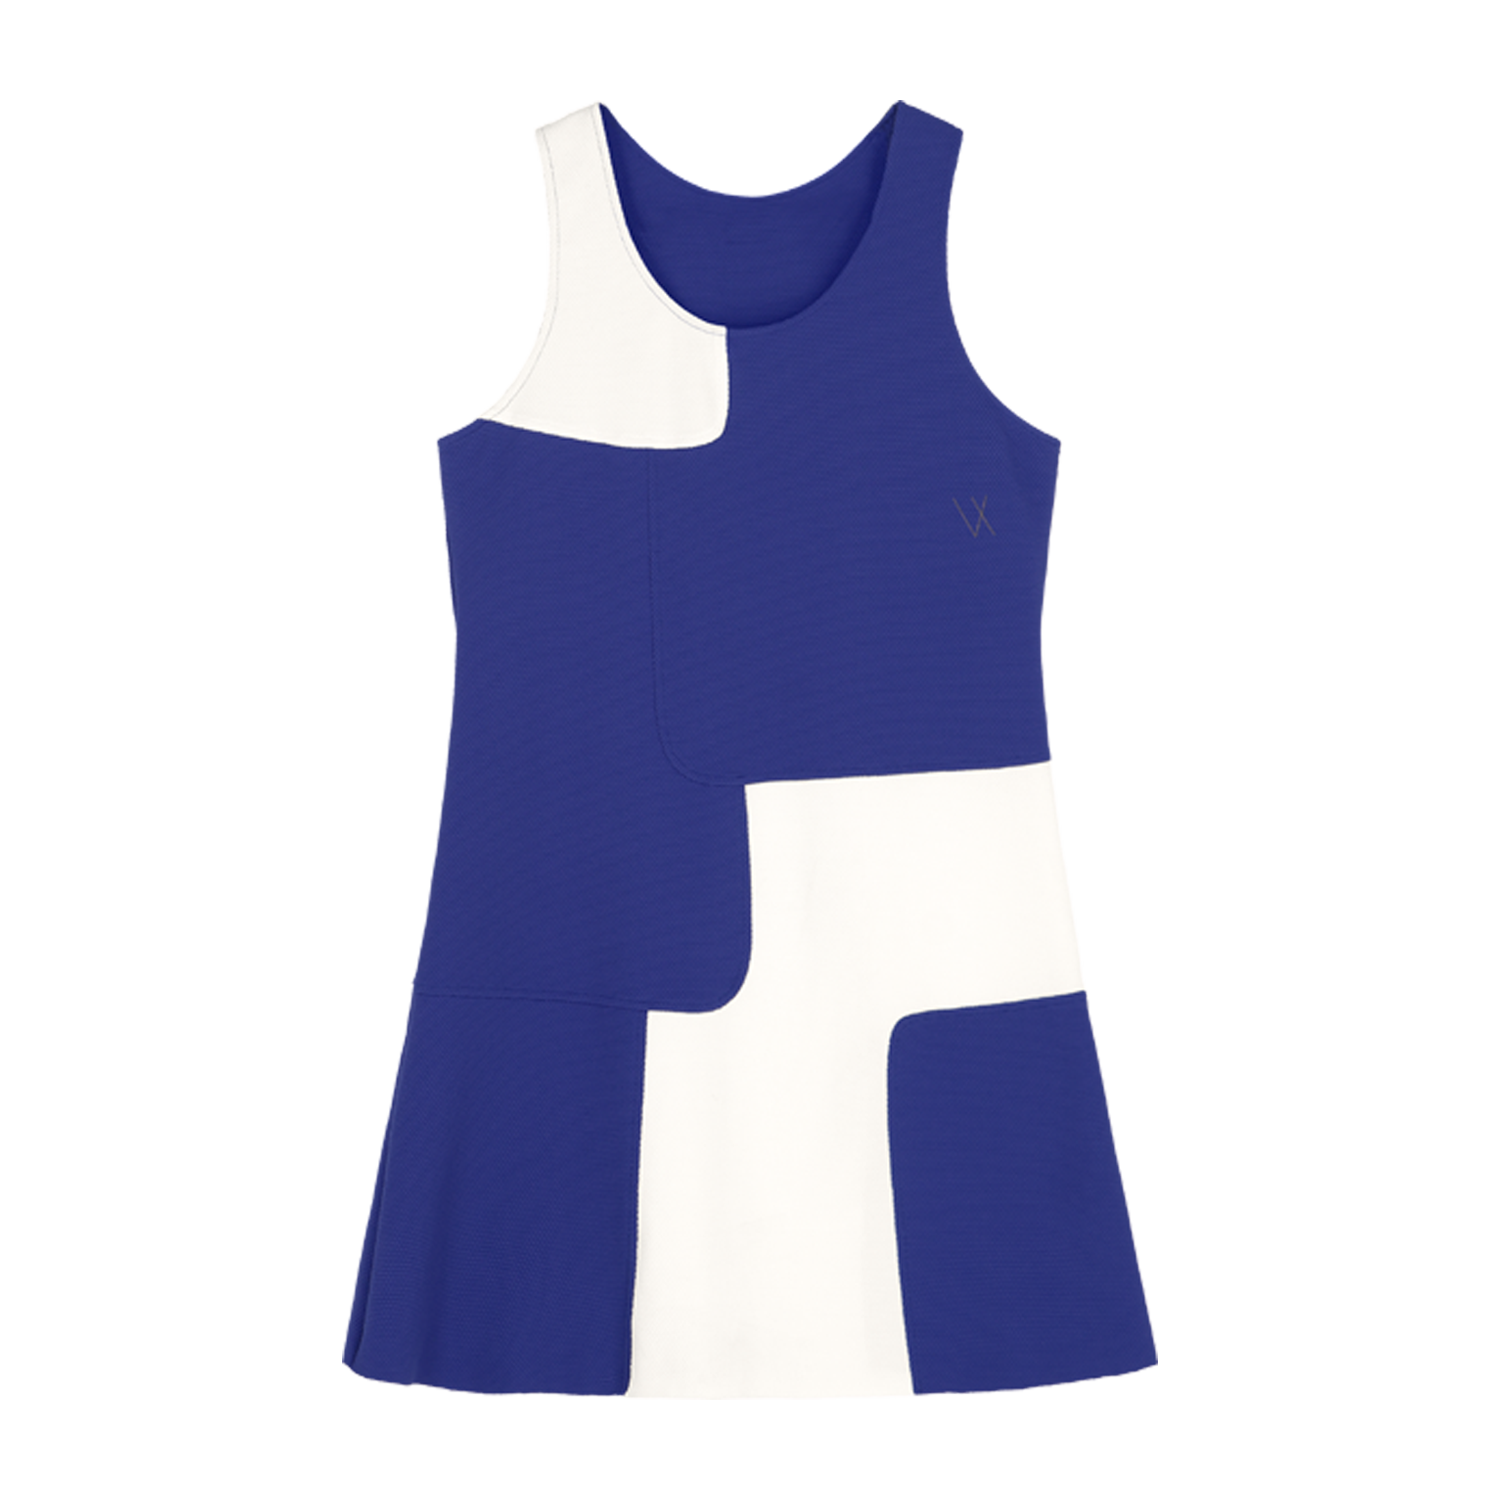 Vieux Jeu Lina Dress (Women's) - Blue/White